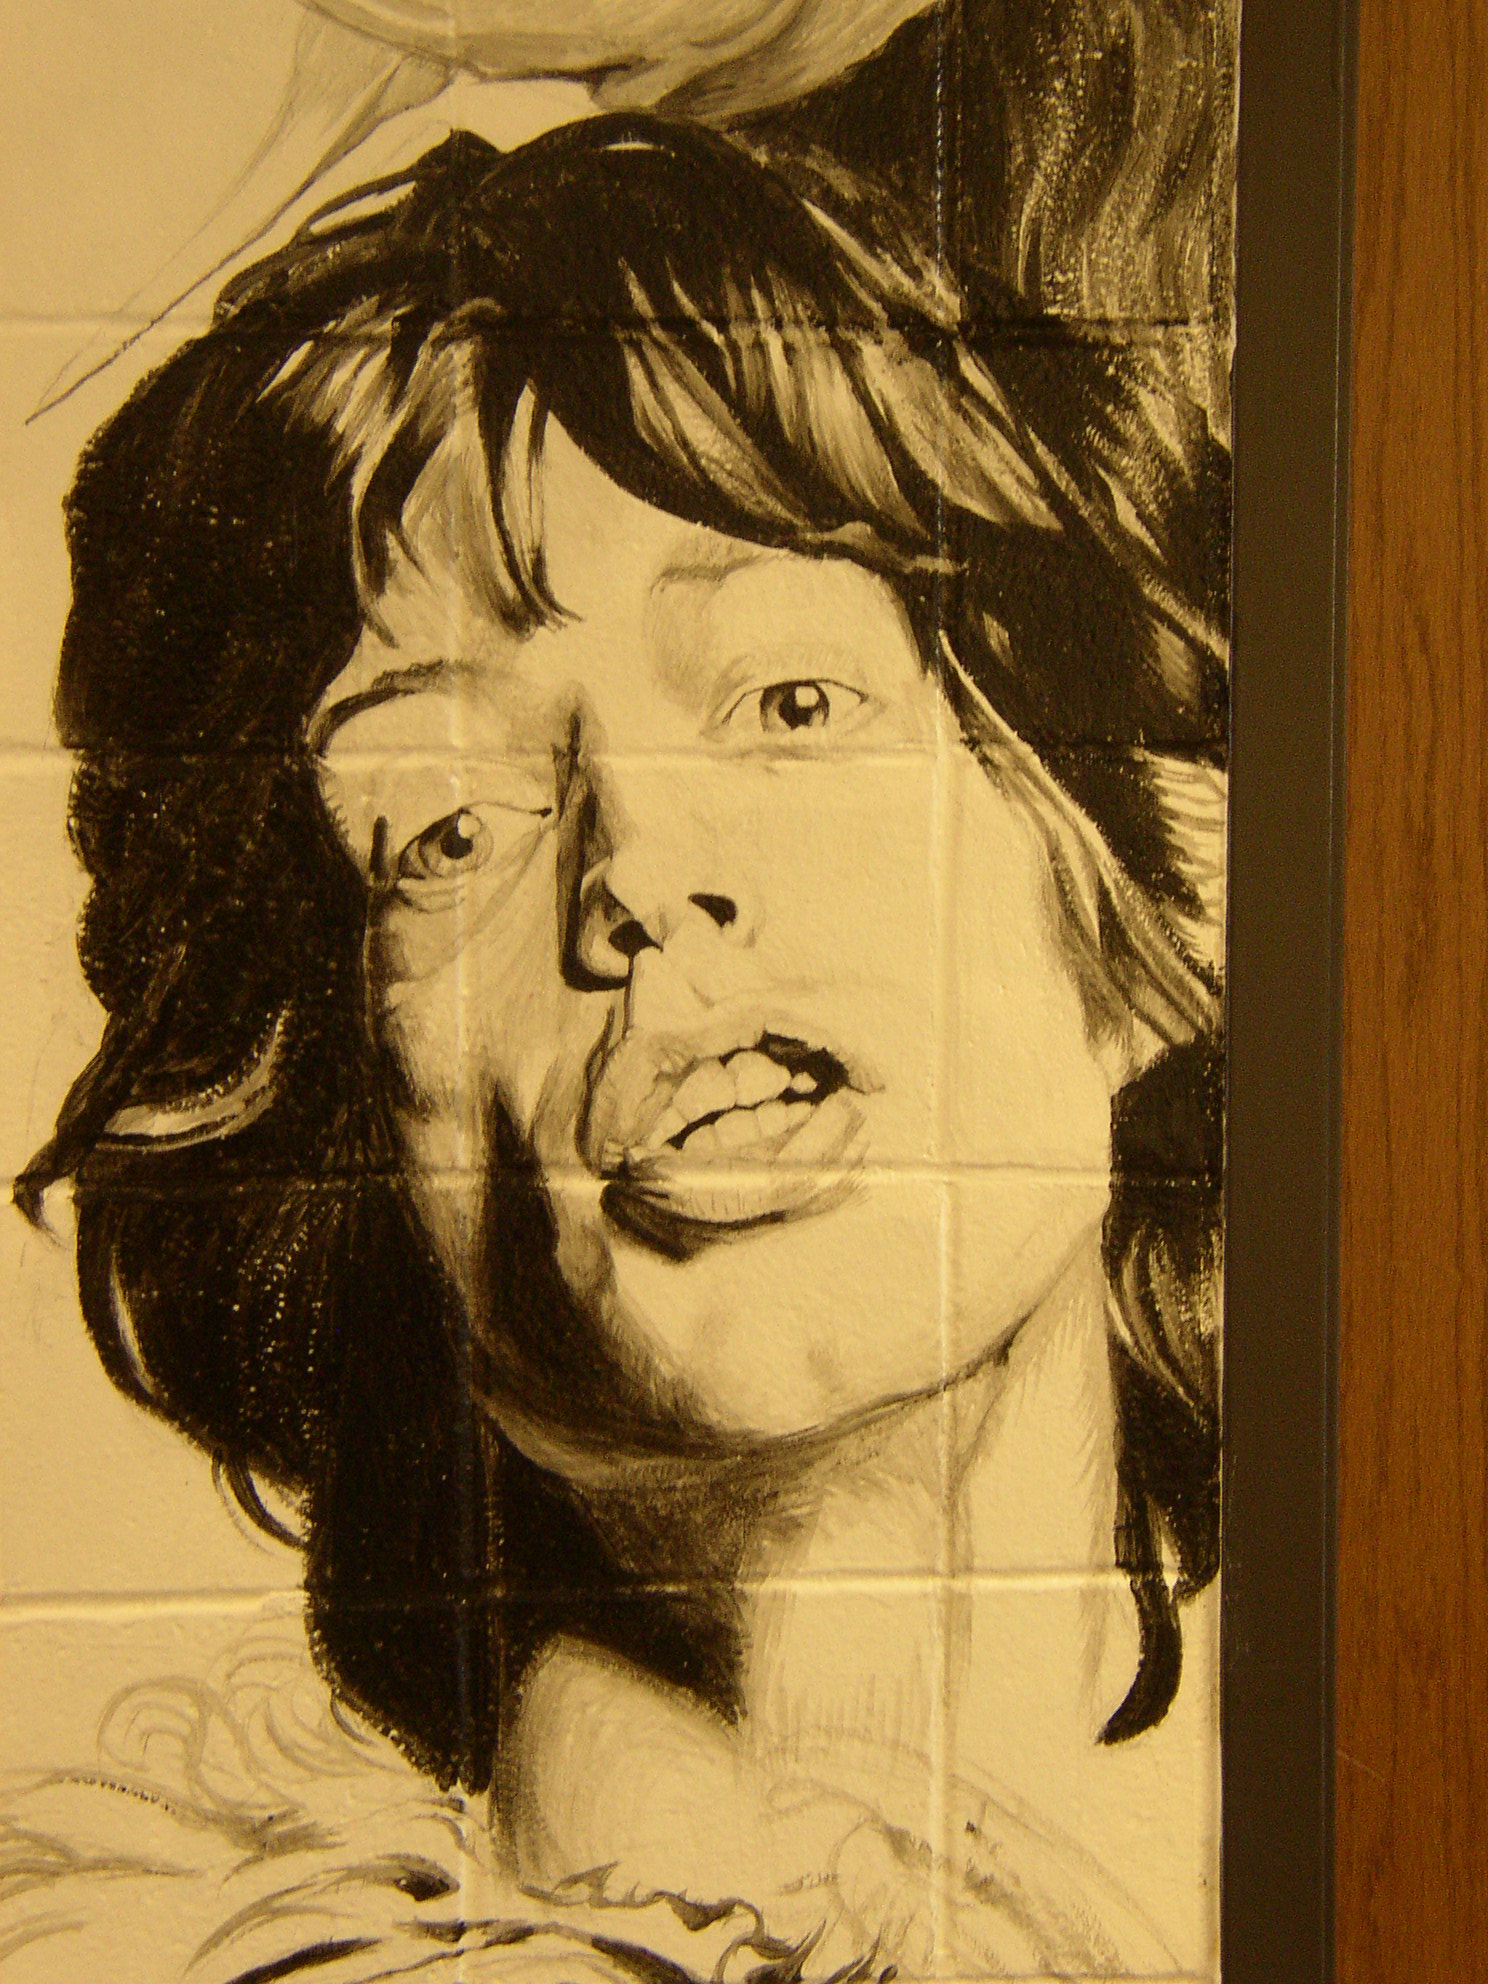 school mural: Mick